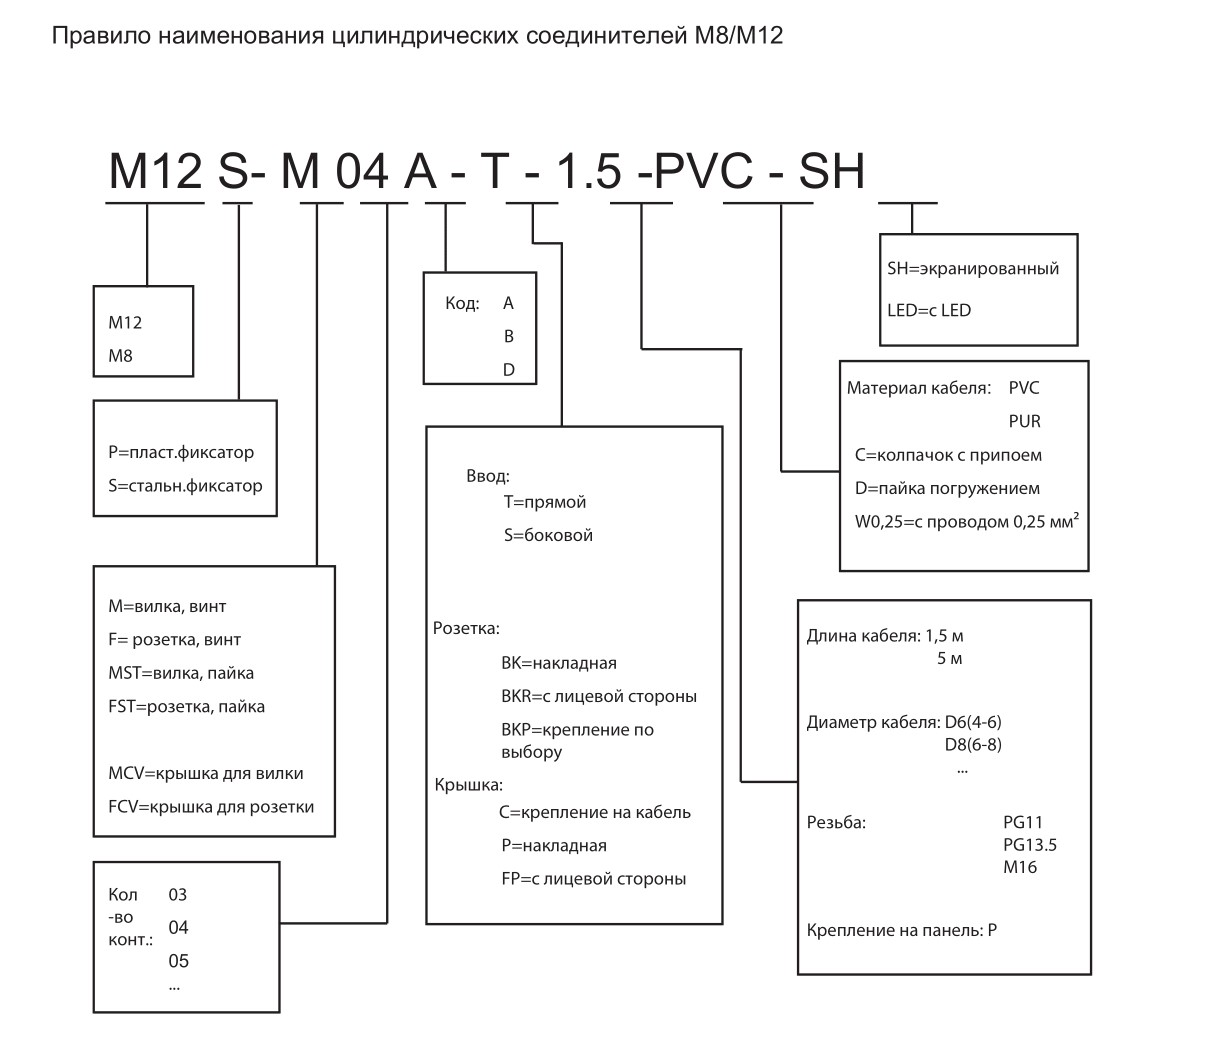 Цилиндрический соединитель-вилка с кабелем M8-M04-S-5.0-PUR-SH 1620045012042: Структура обозначения